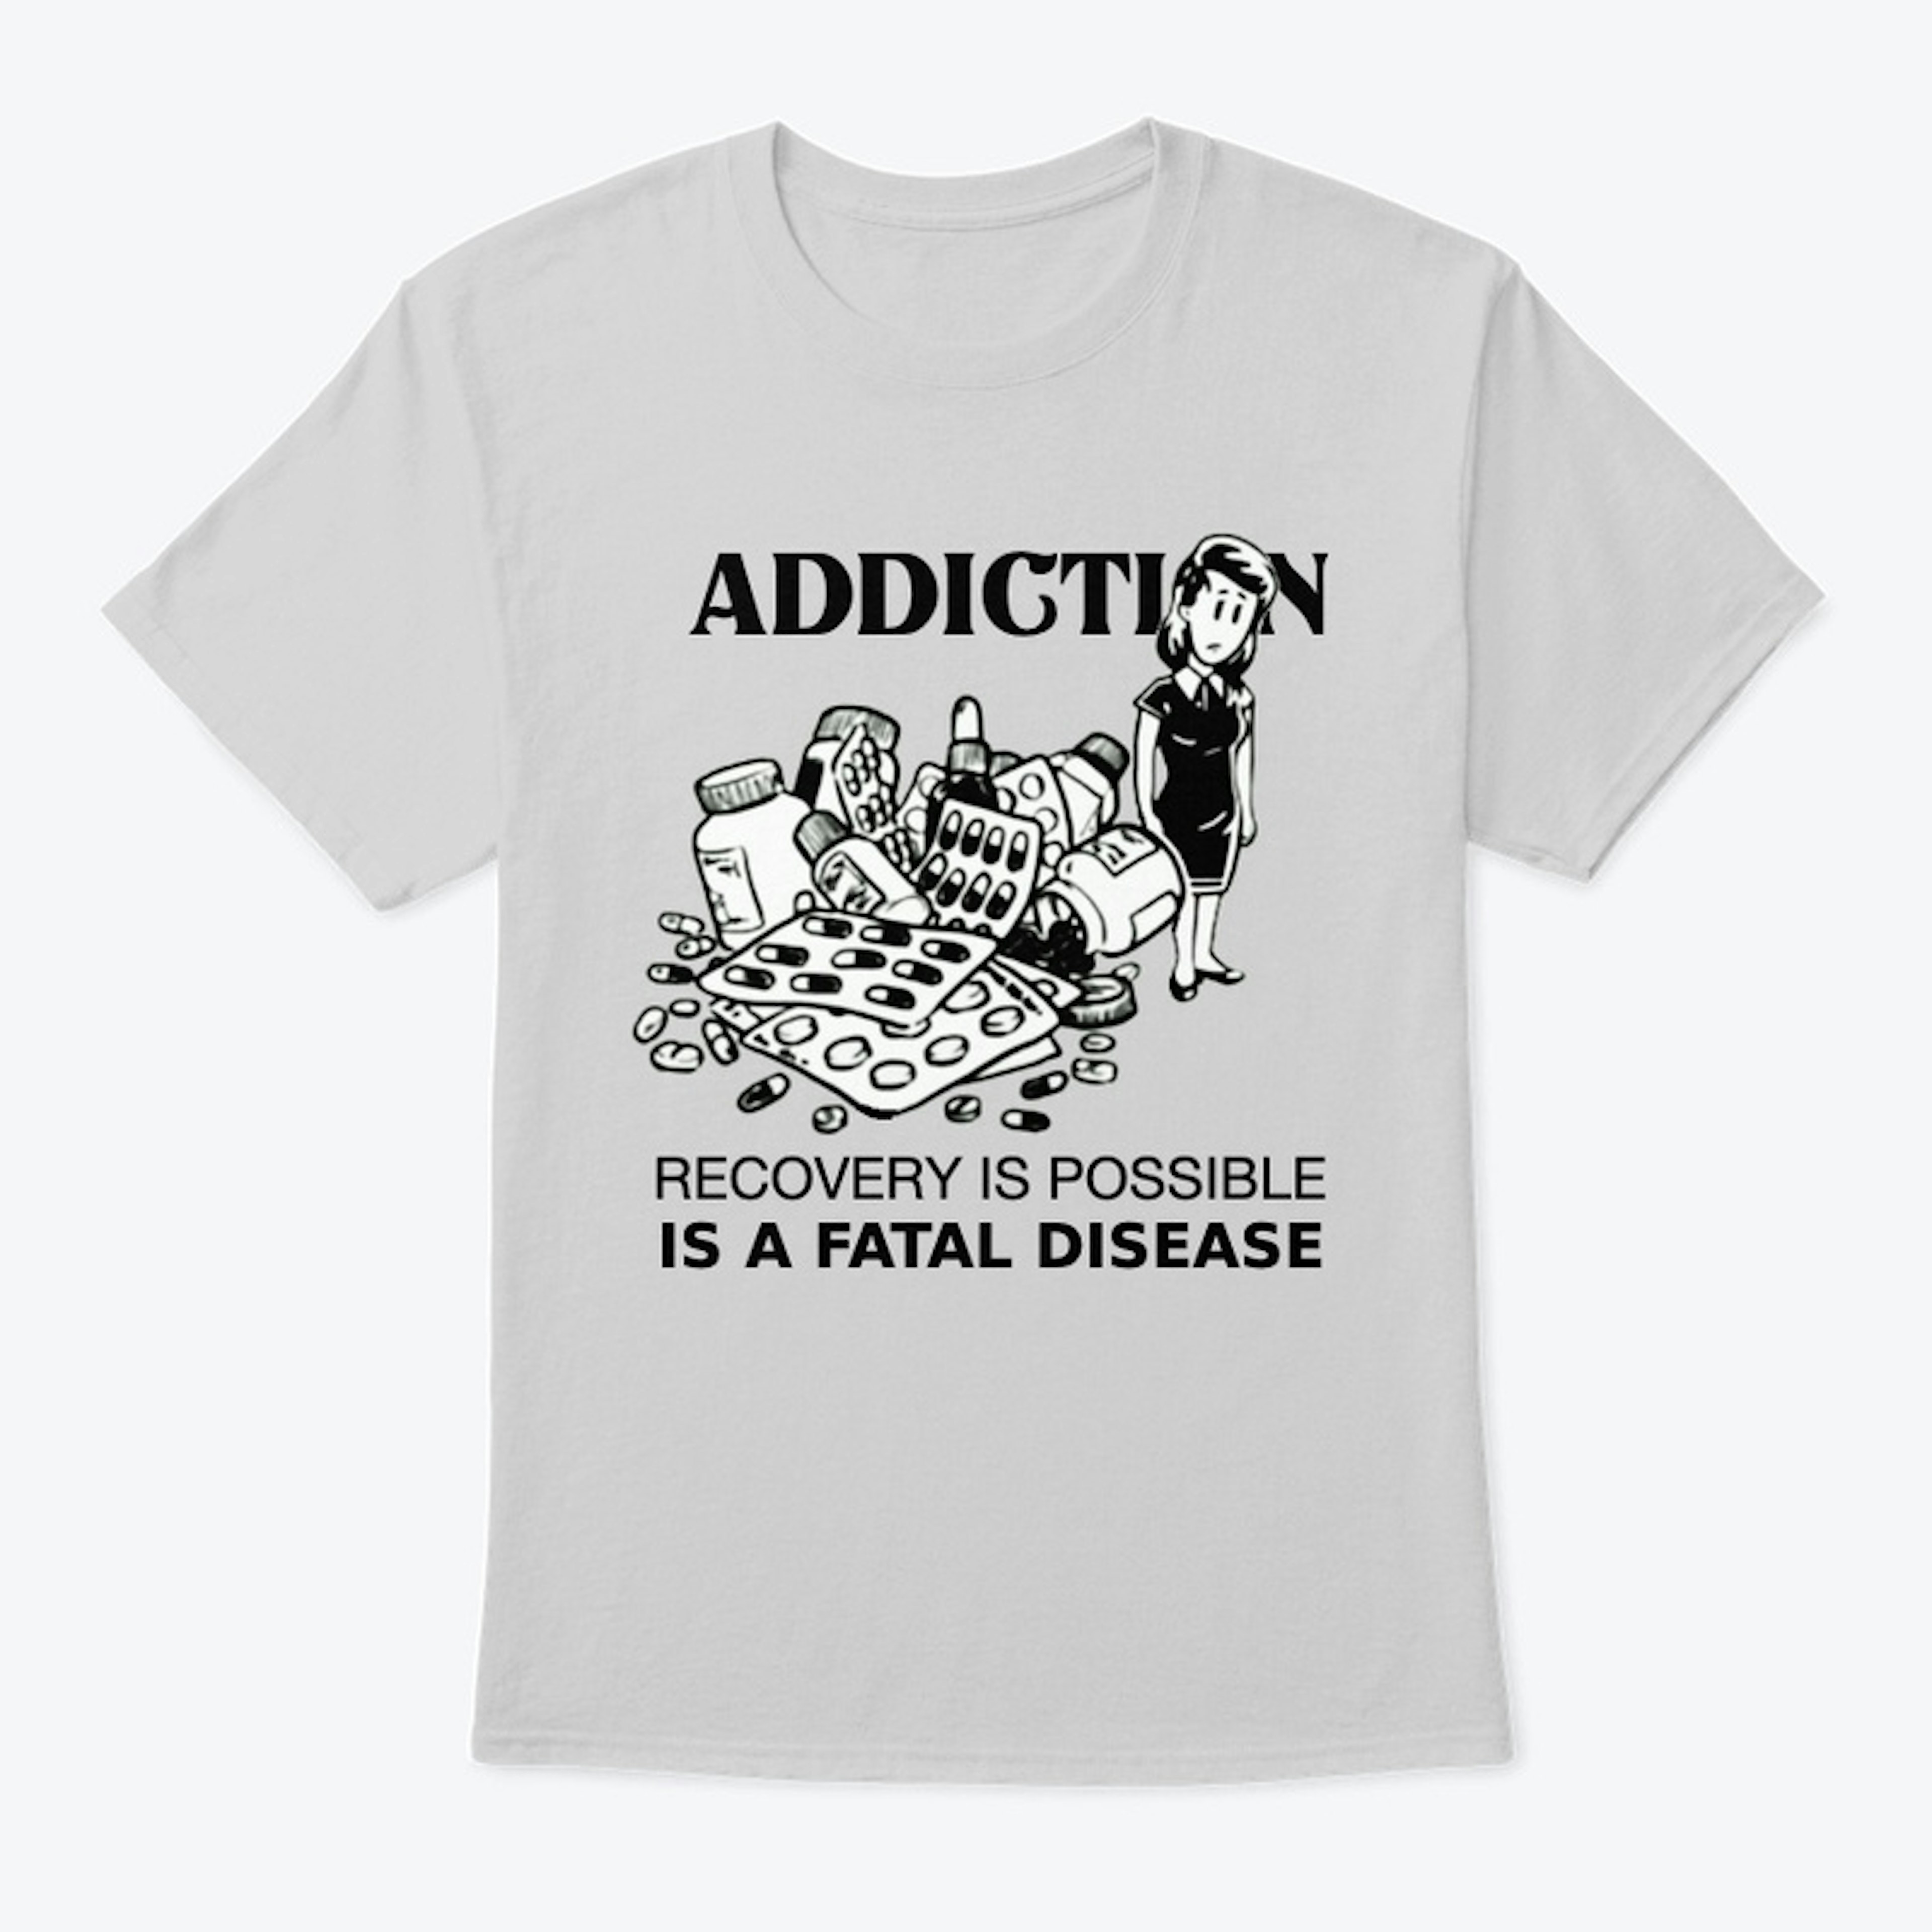 ADDICTION IS A FATAL DISEASE